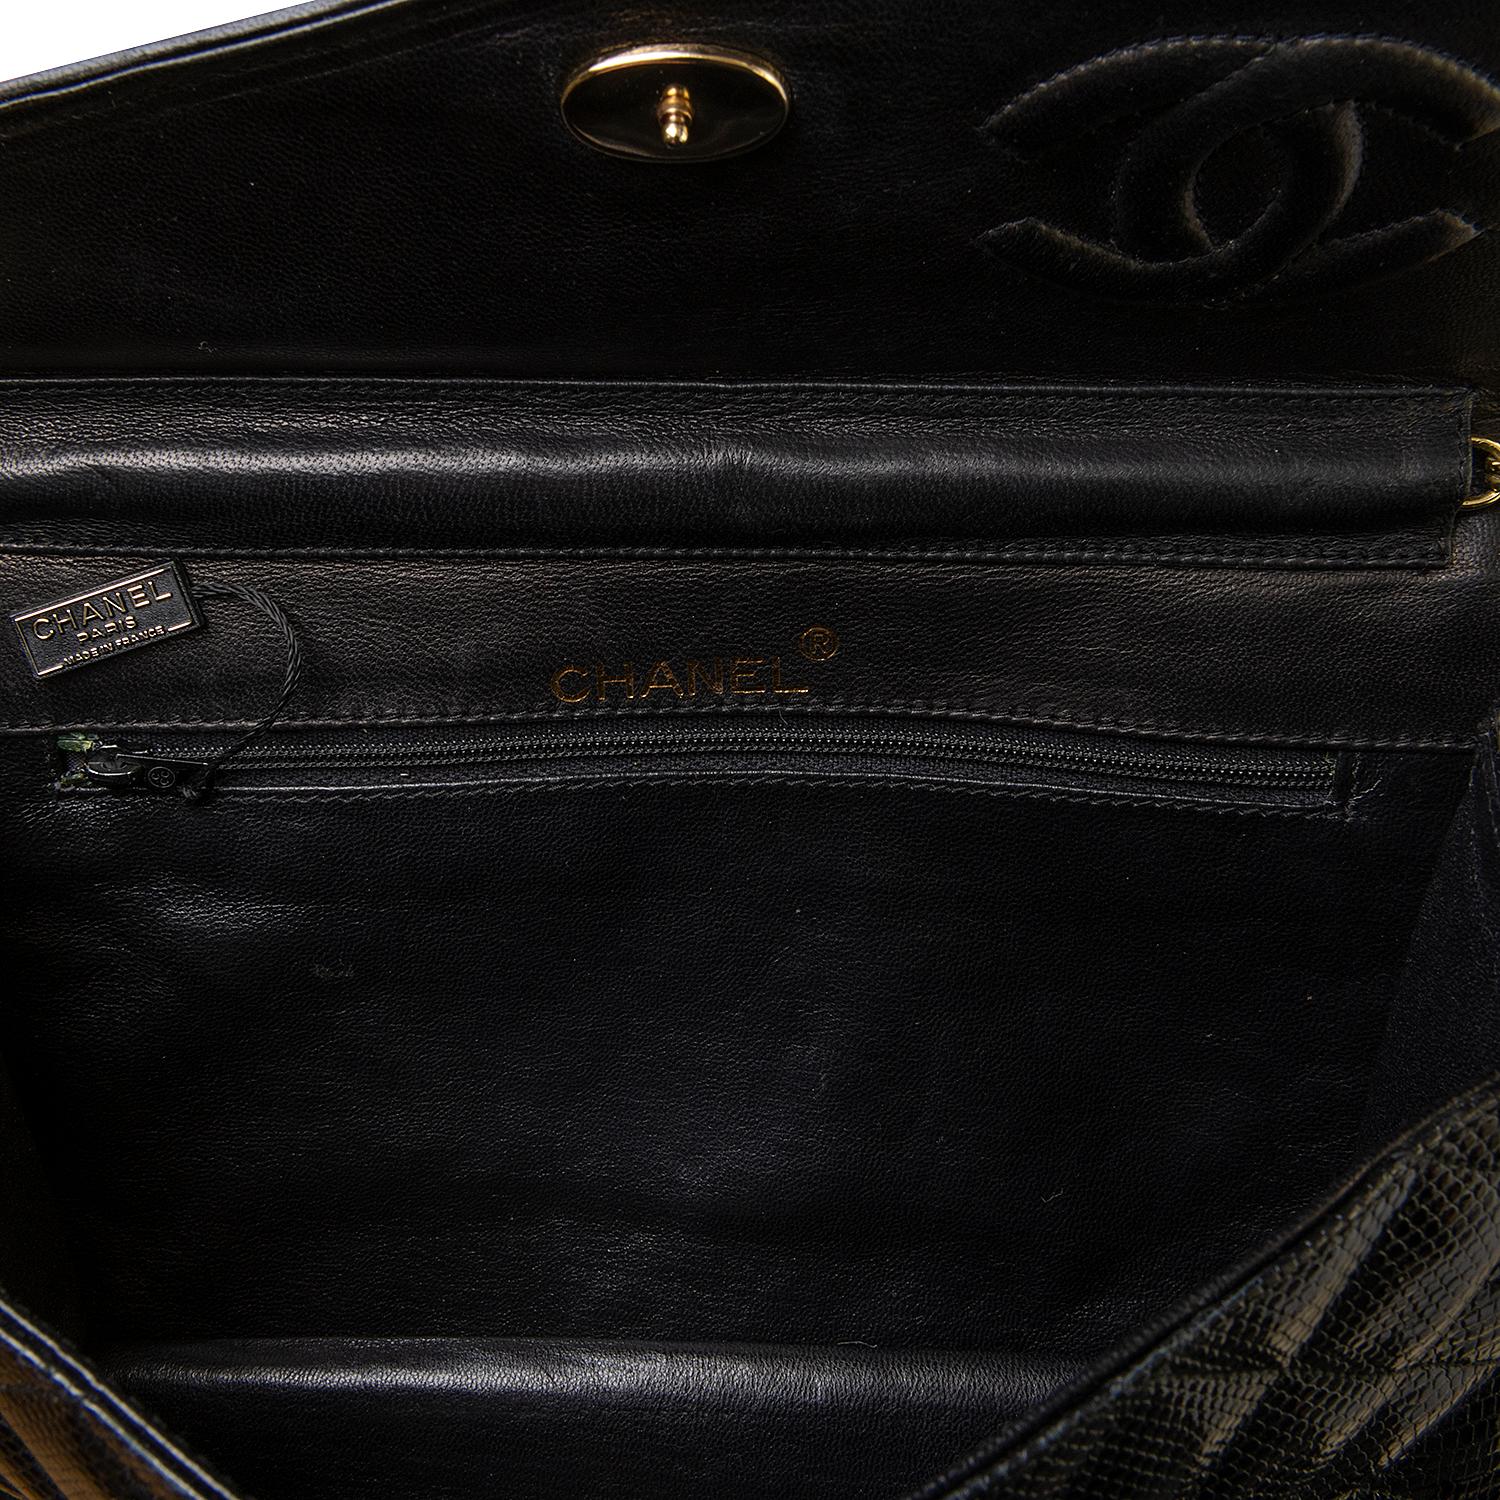 Rare Vintage Chanel Black Lizard Evening Bag by Karl Lagerfeld For Sale 2